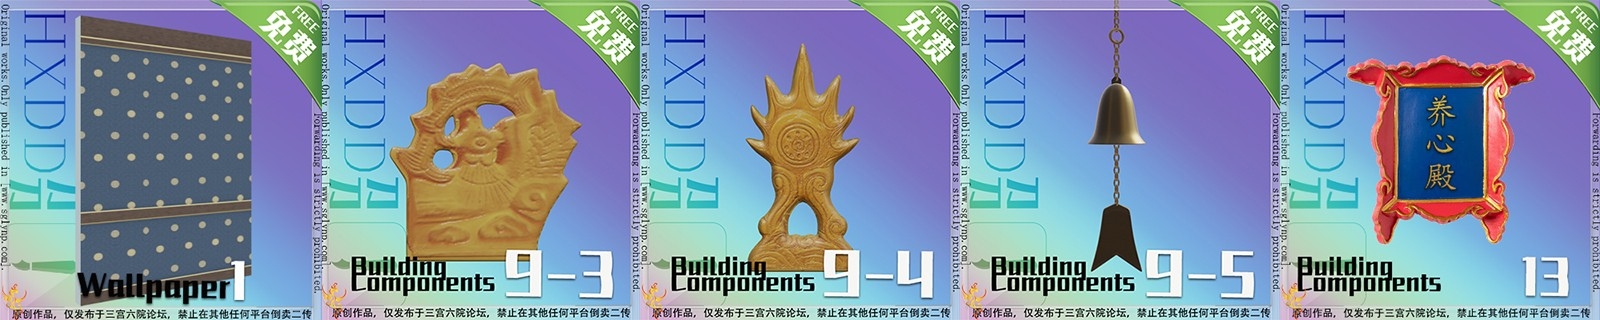 HXDD_HLW_BuildingComponents-F.jpg